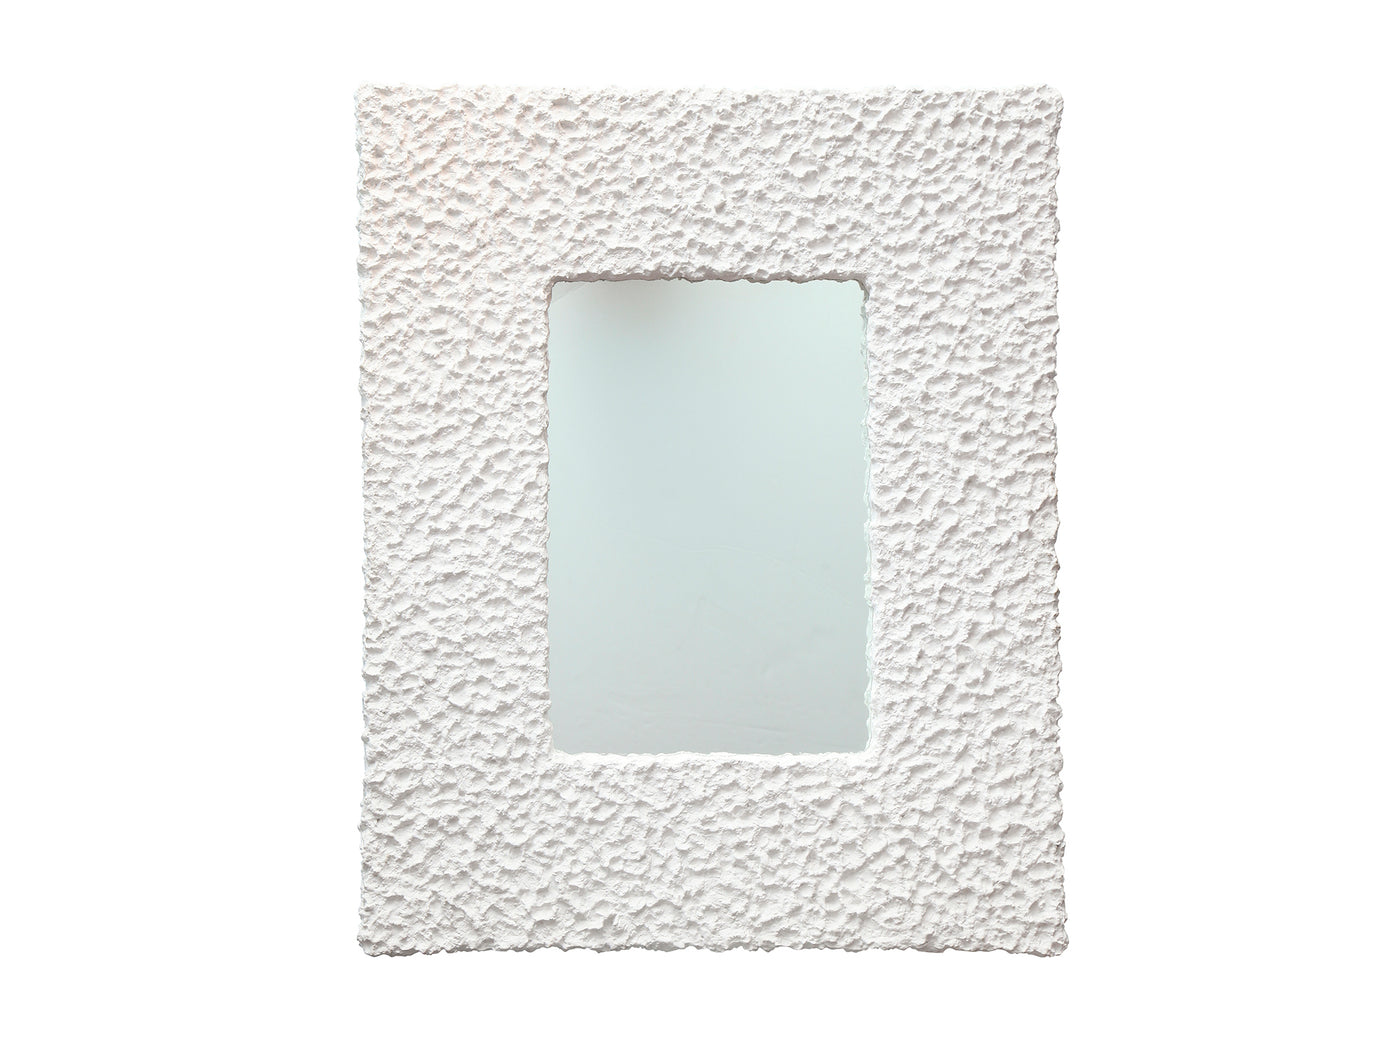 "Névé" Plaster Wall Mirror, Contemporary by Alexandre Logé